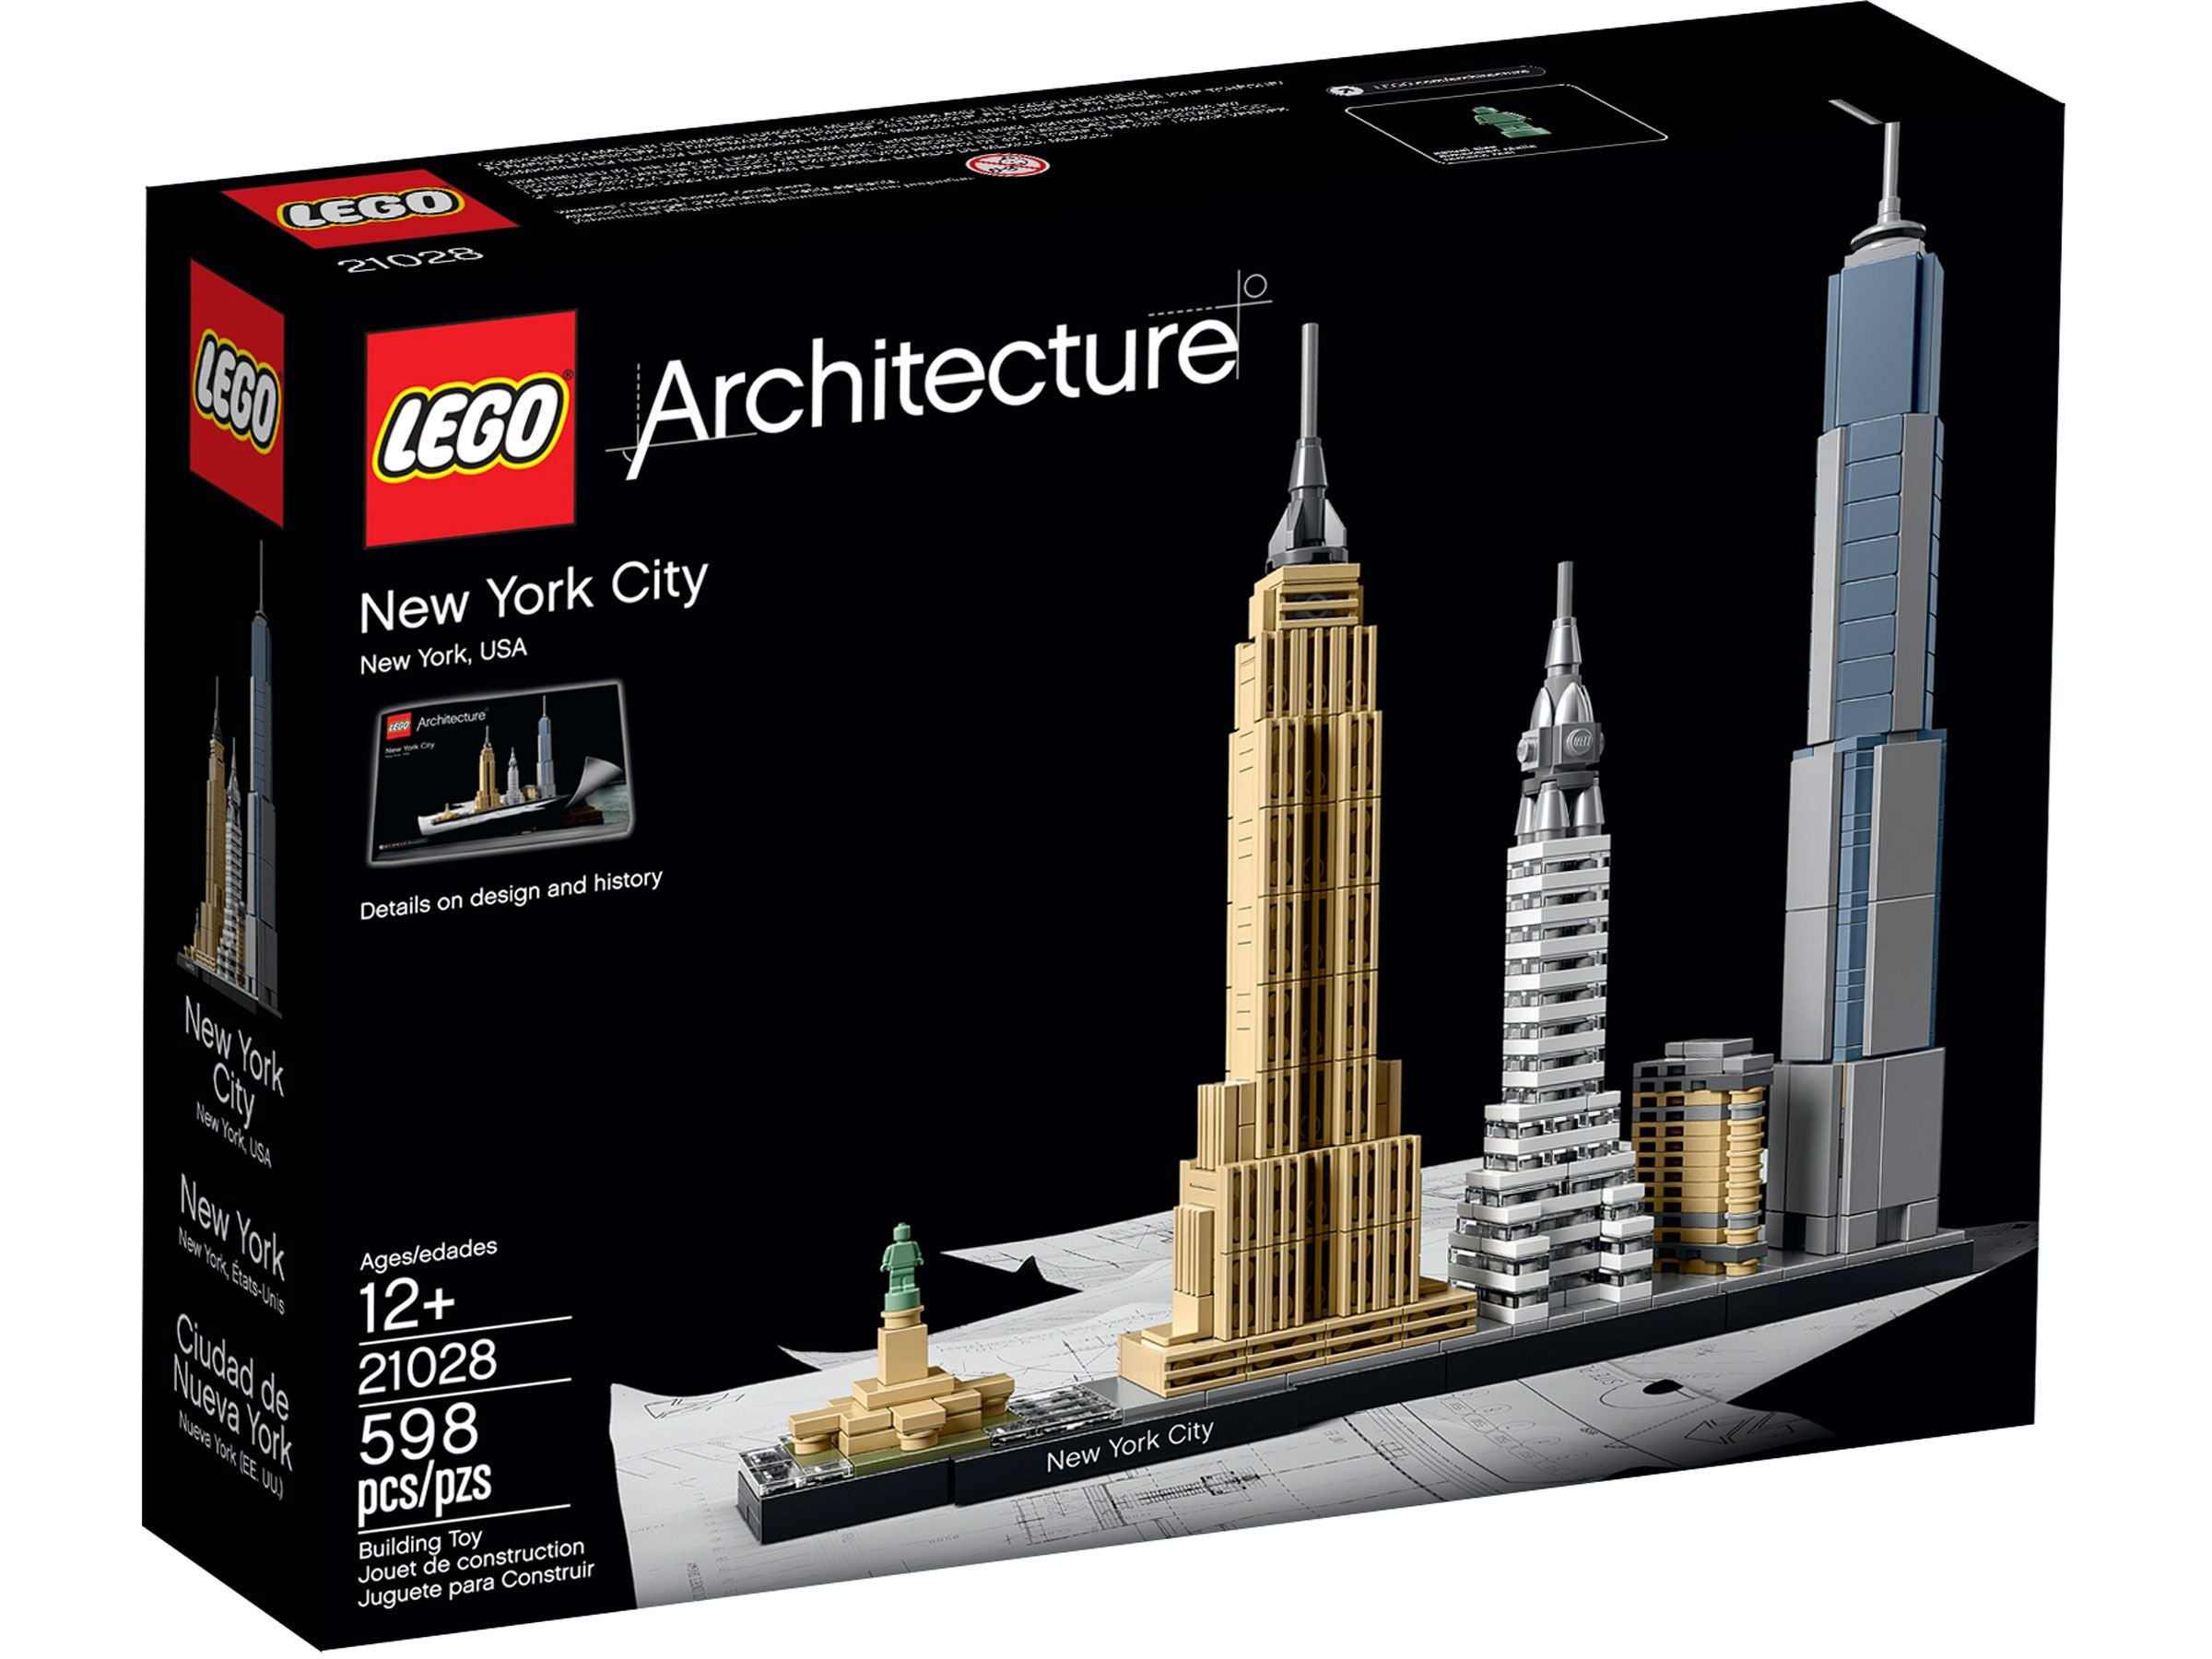 LEGO Architecture 21028 New York City LEGO_21028_box1_na.jpg